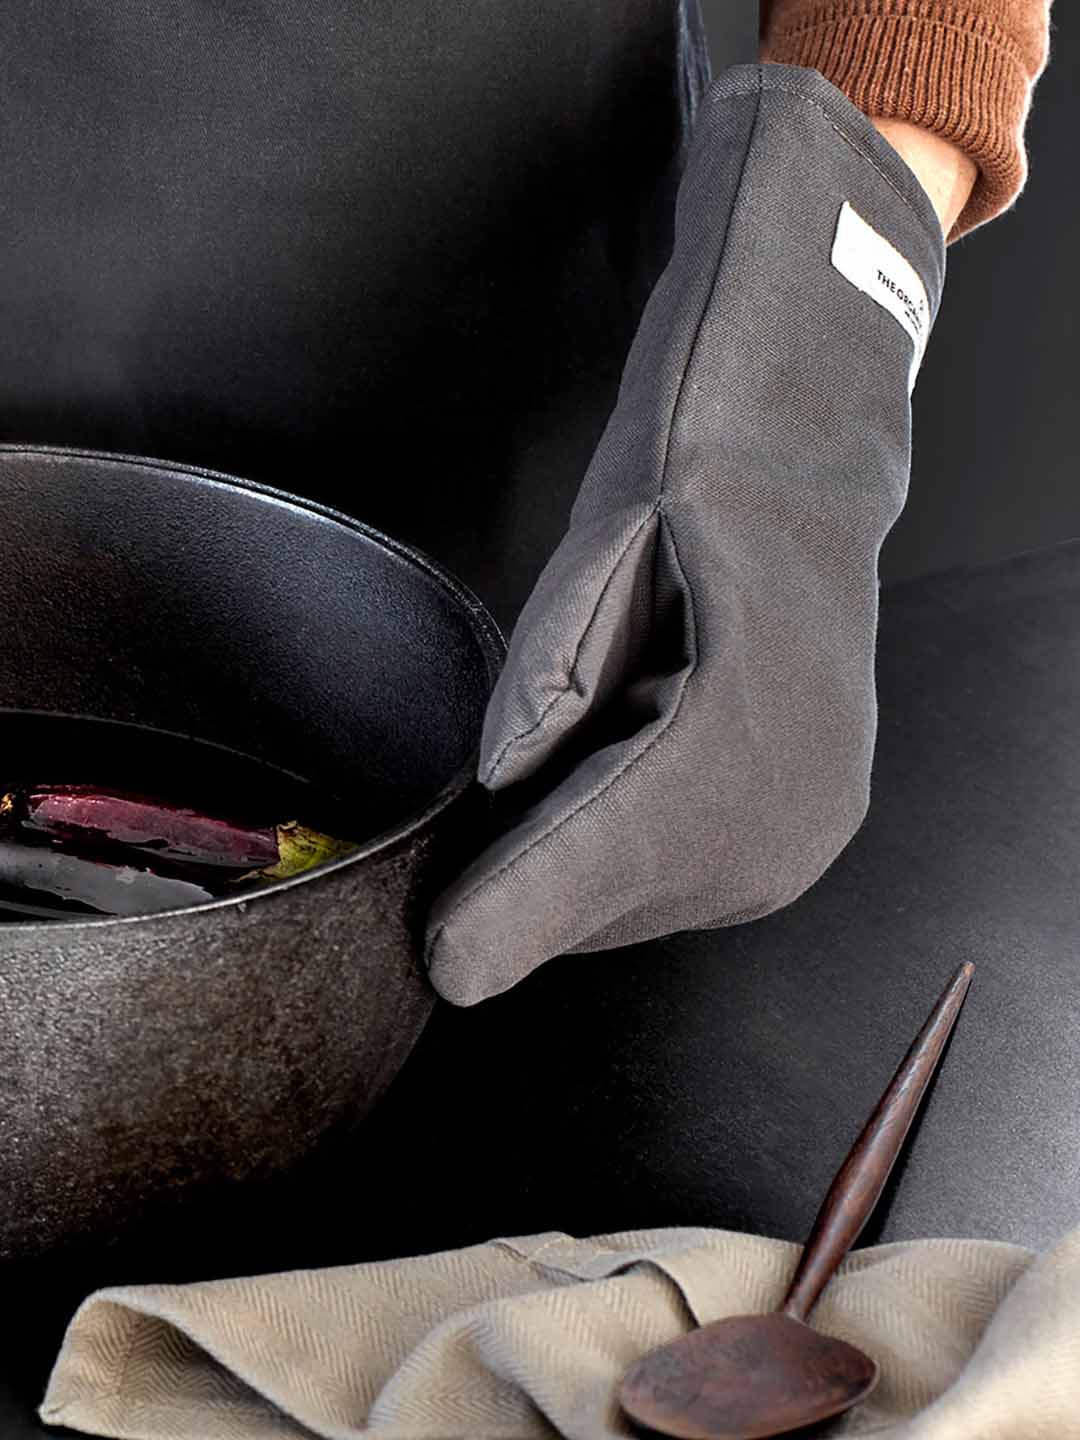 Перчатки для духовки TheOrganic темно-серого цвета на темном фоне